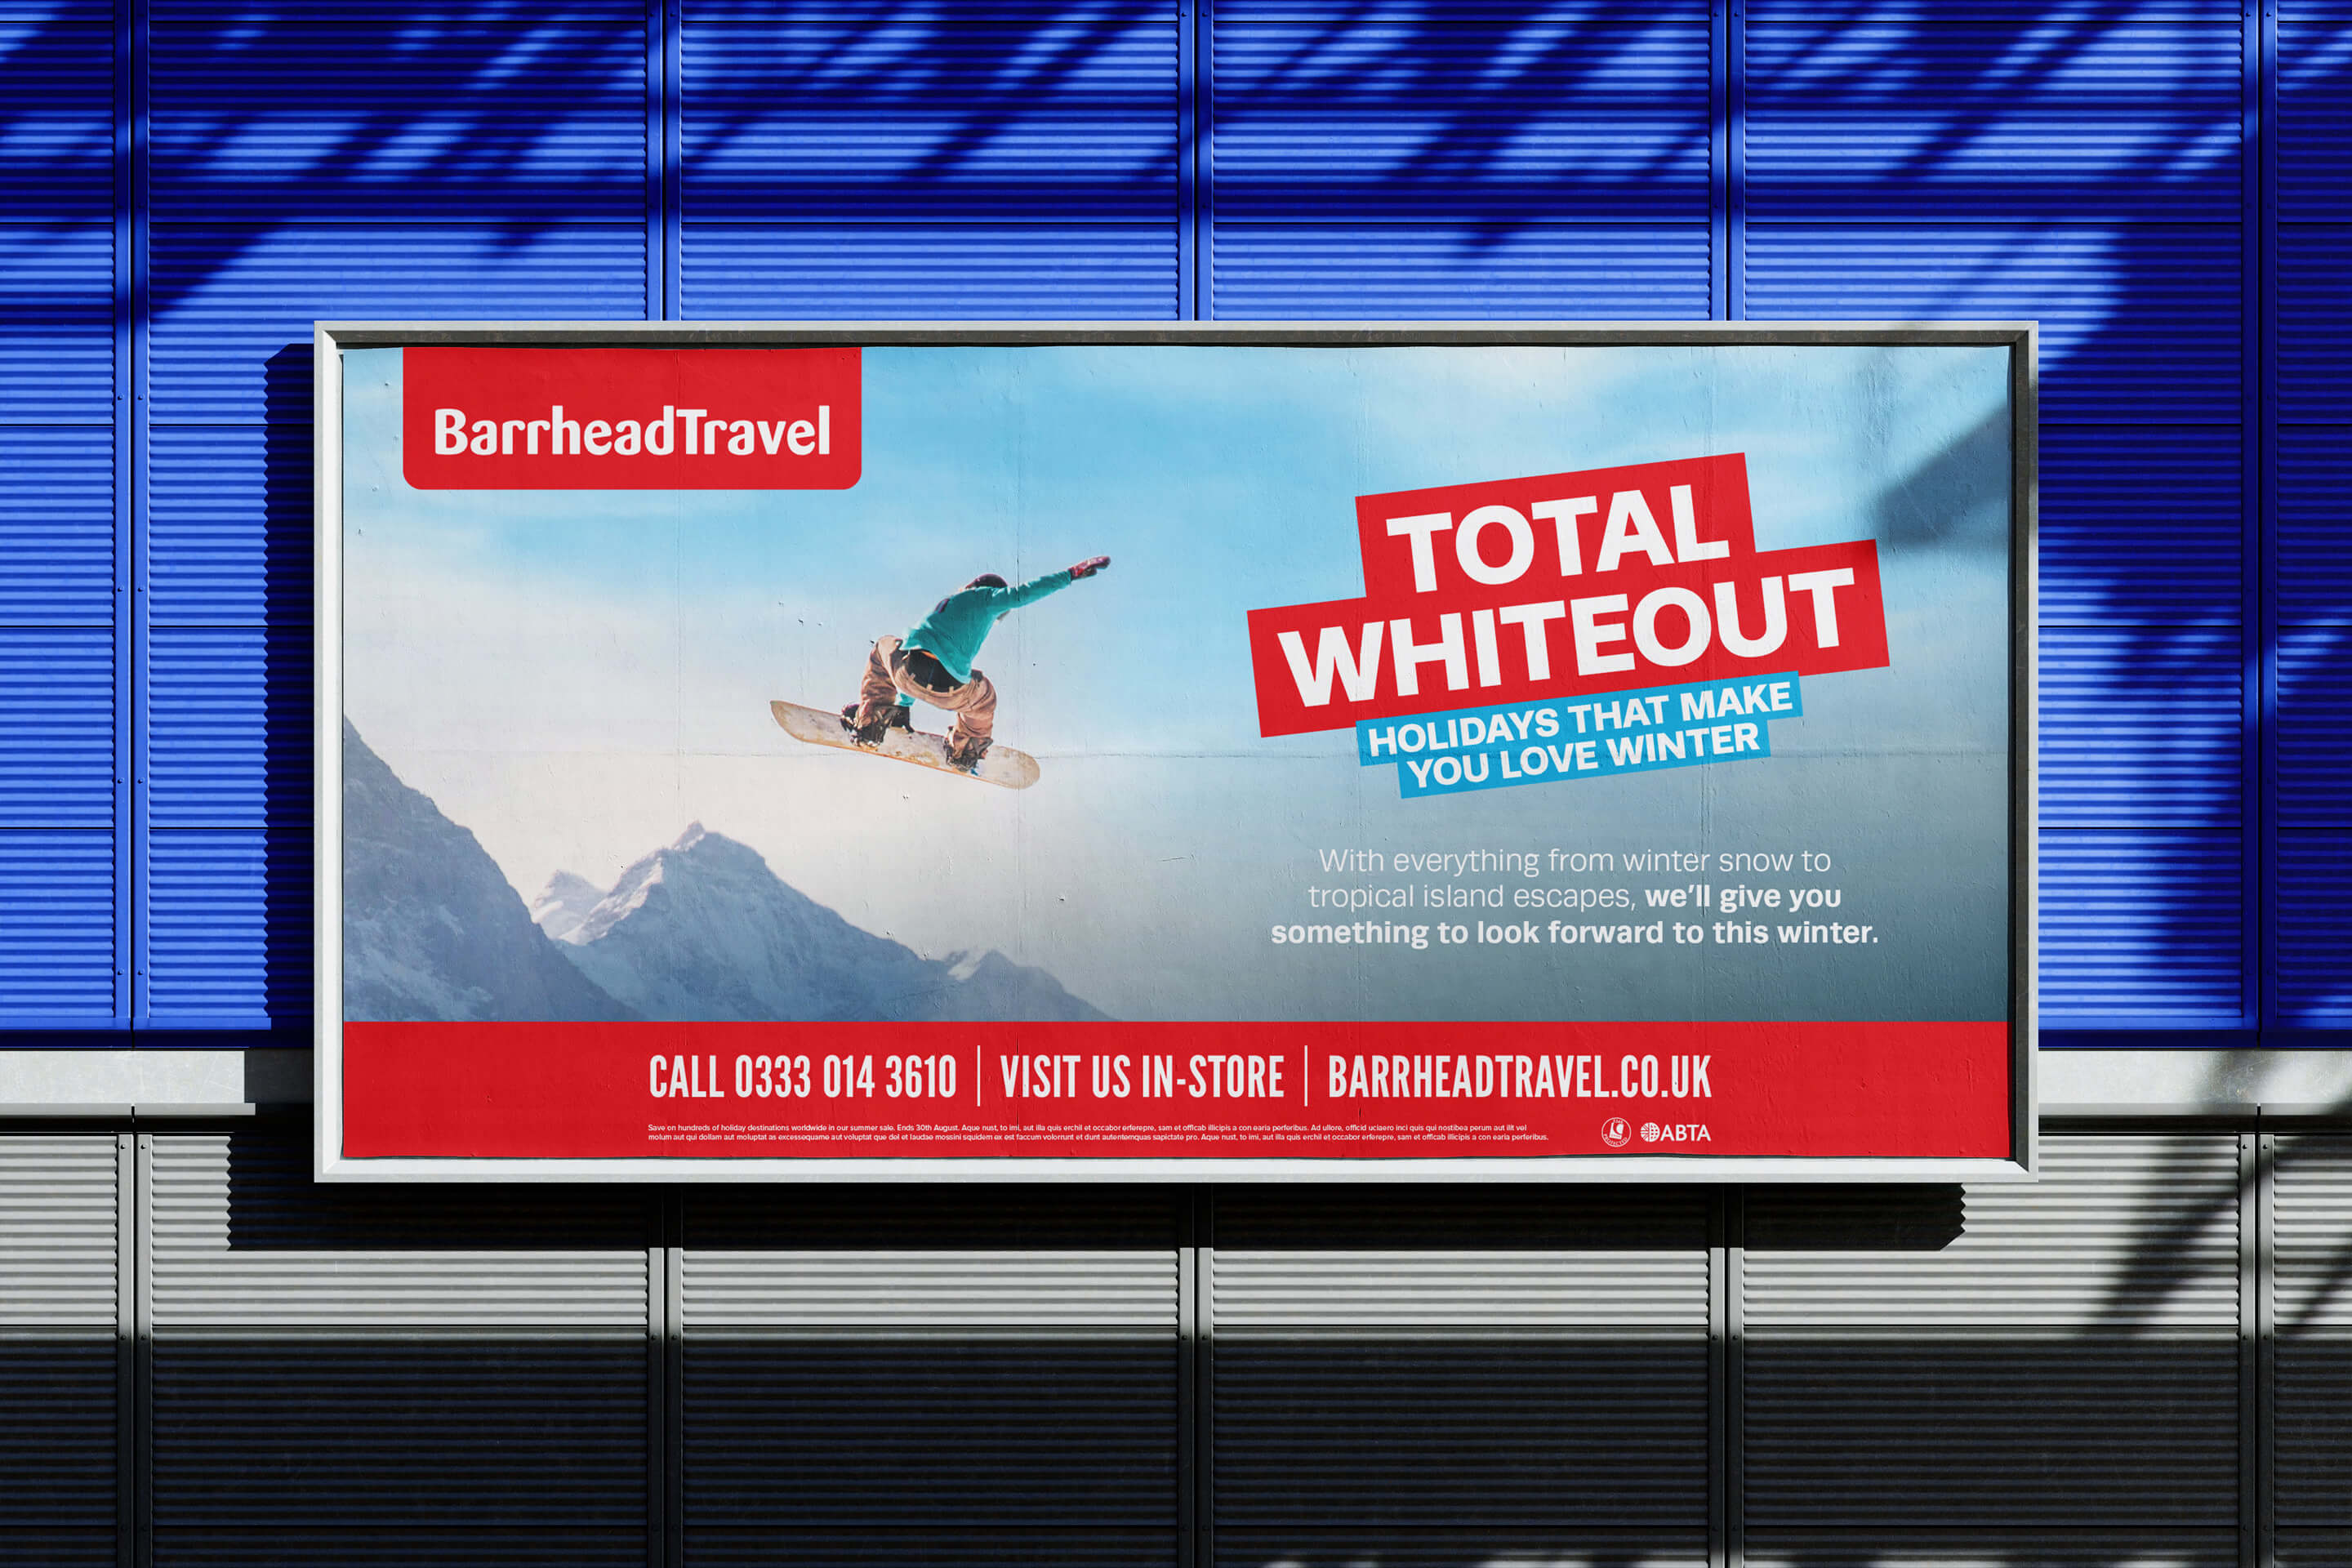 Barrhead Travel Love Winter - Total Whiteout